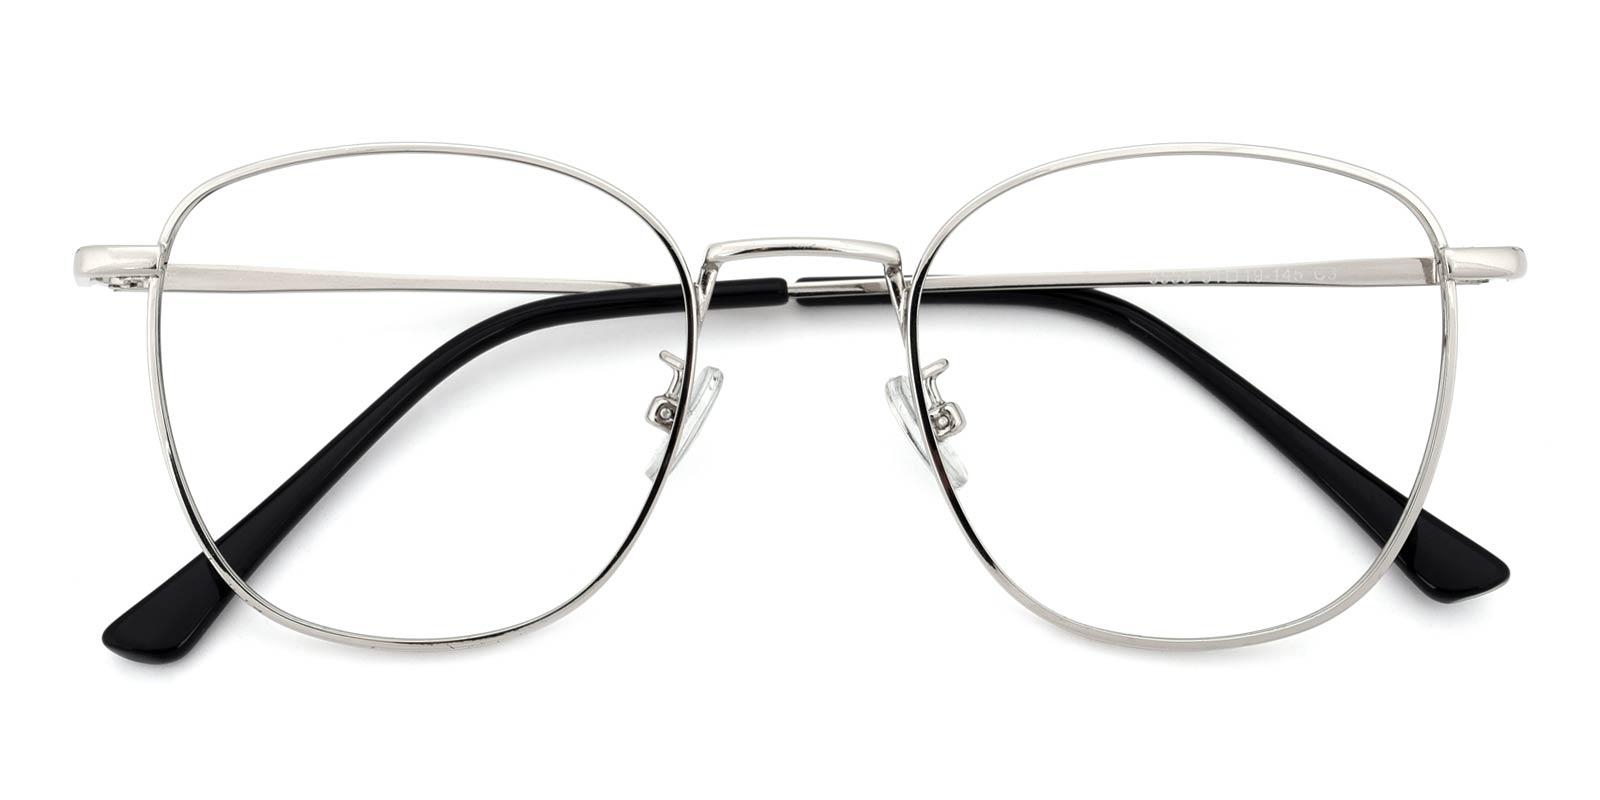 Richard-Silver-Square-Metal-Eyeglasses-detail